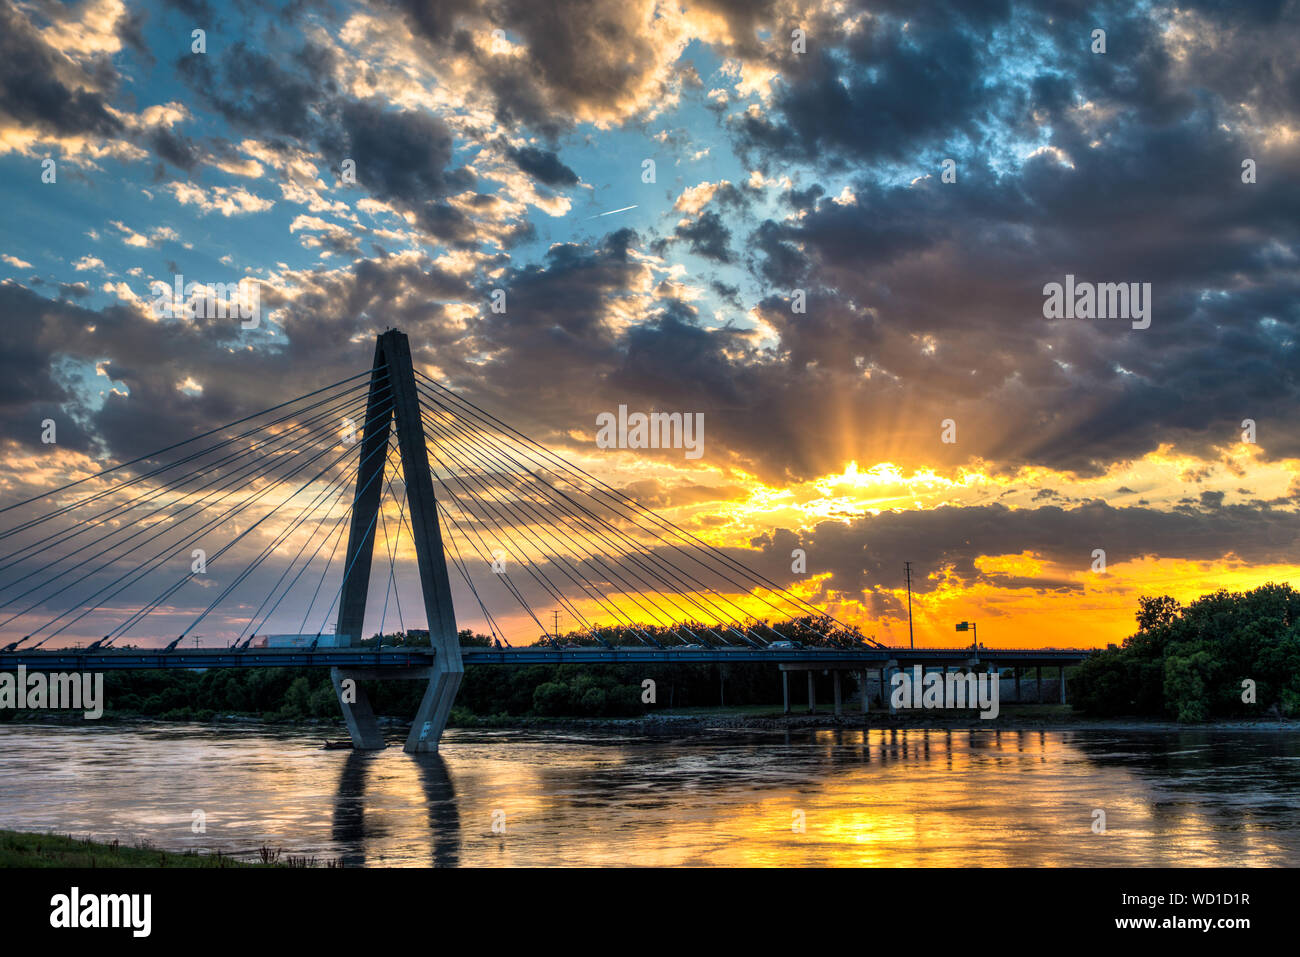 Christopher S Bond Bridge Over Missouri River Against Cloudy Sky At Sunset Stock Photo